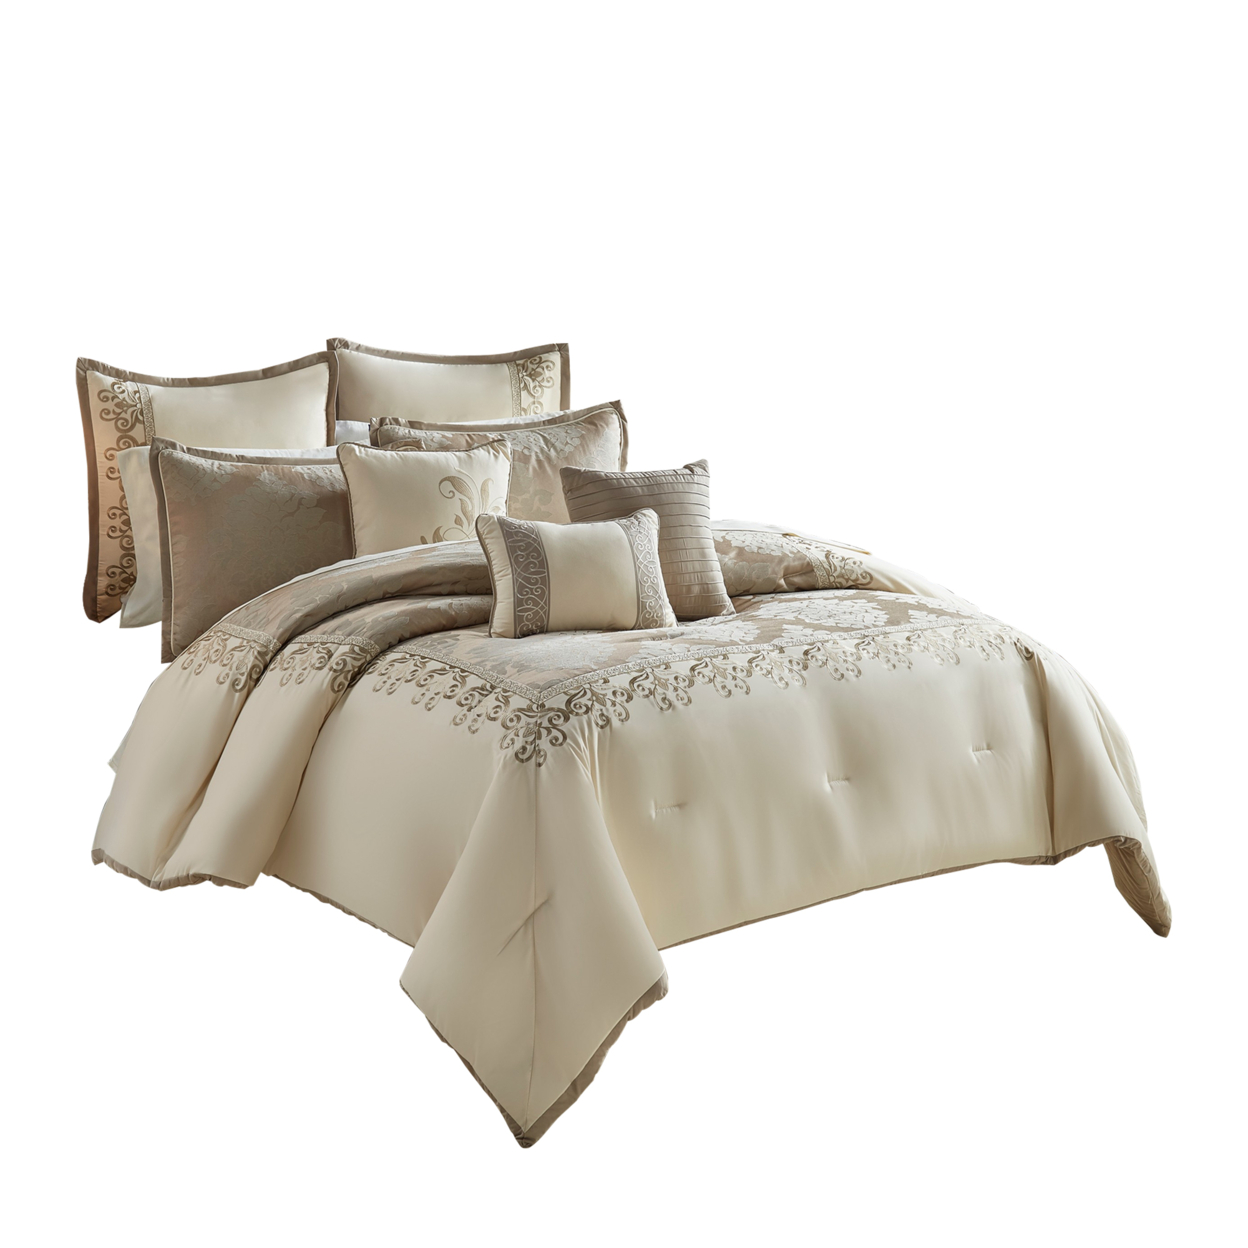 10 Piece King Polyester Comforter Set With Damask Print, Cream And Gold- Saltoro Sherpi